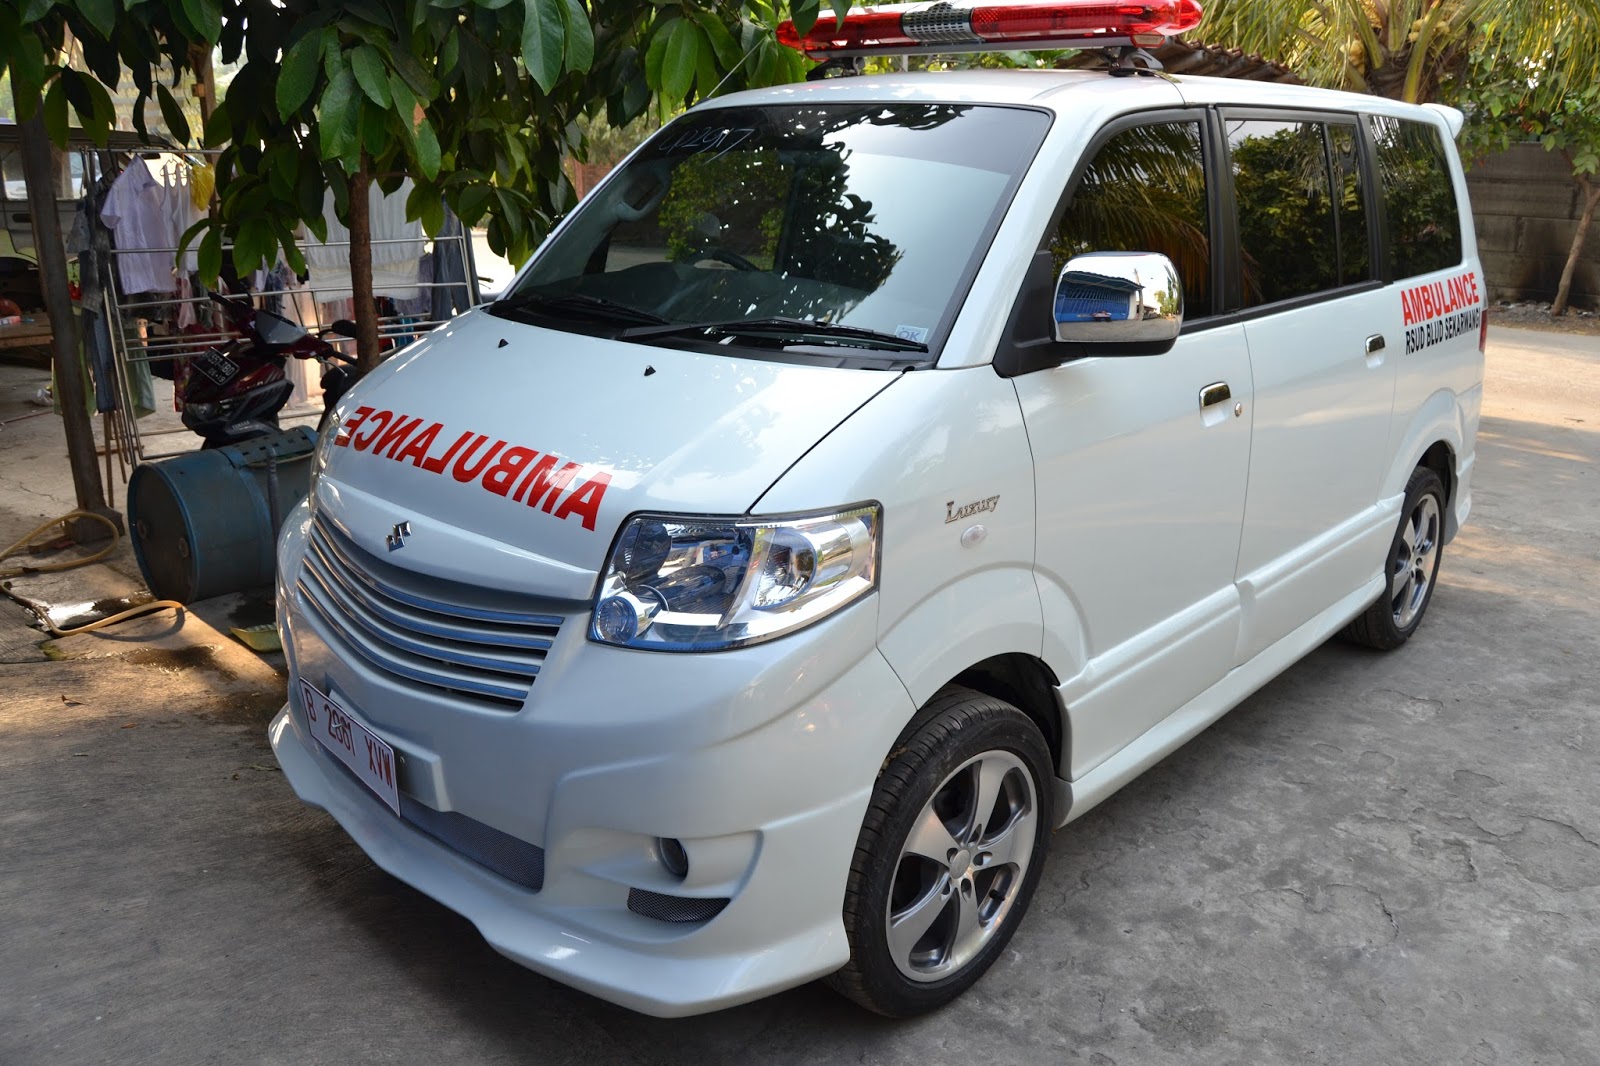 PT. Ambulance Pintar Indonesia, Workshop Karoseri Mobil Ambulance